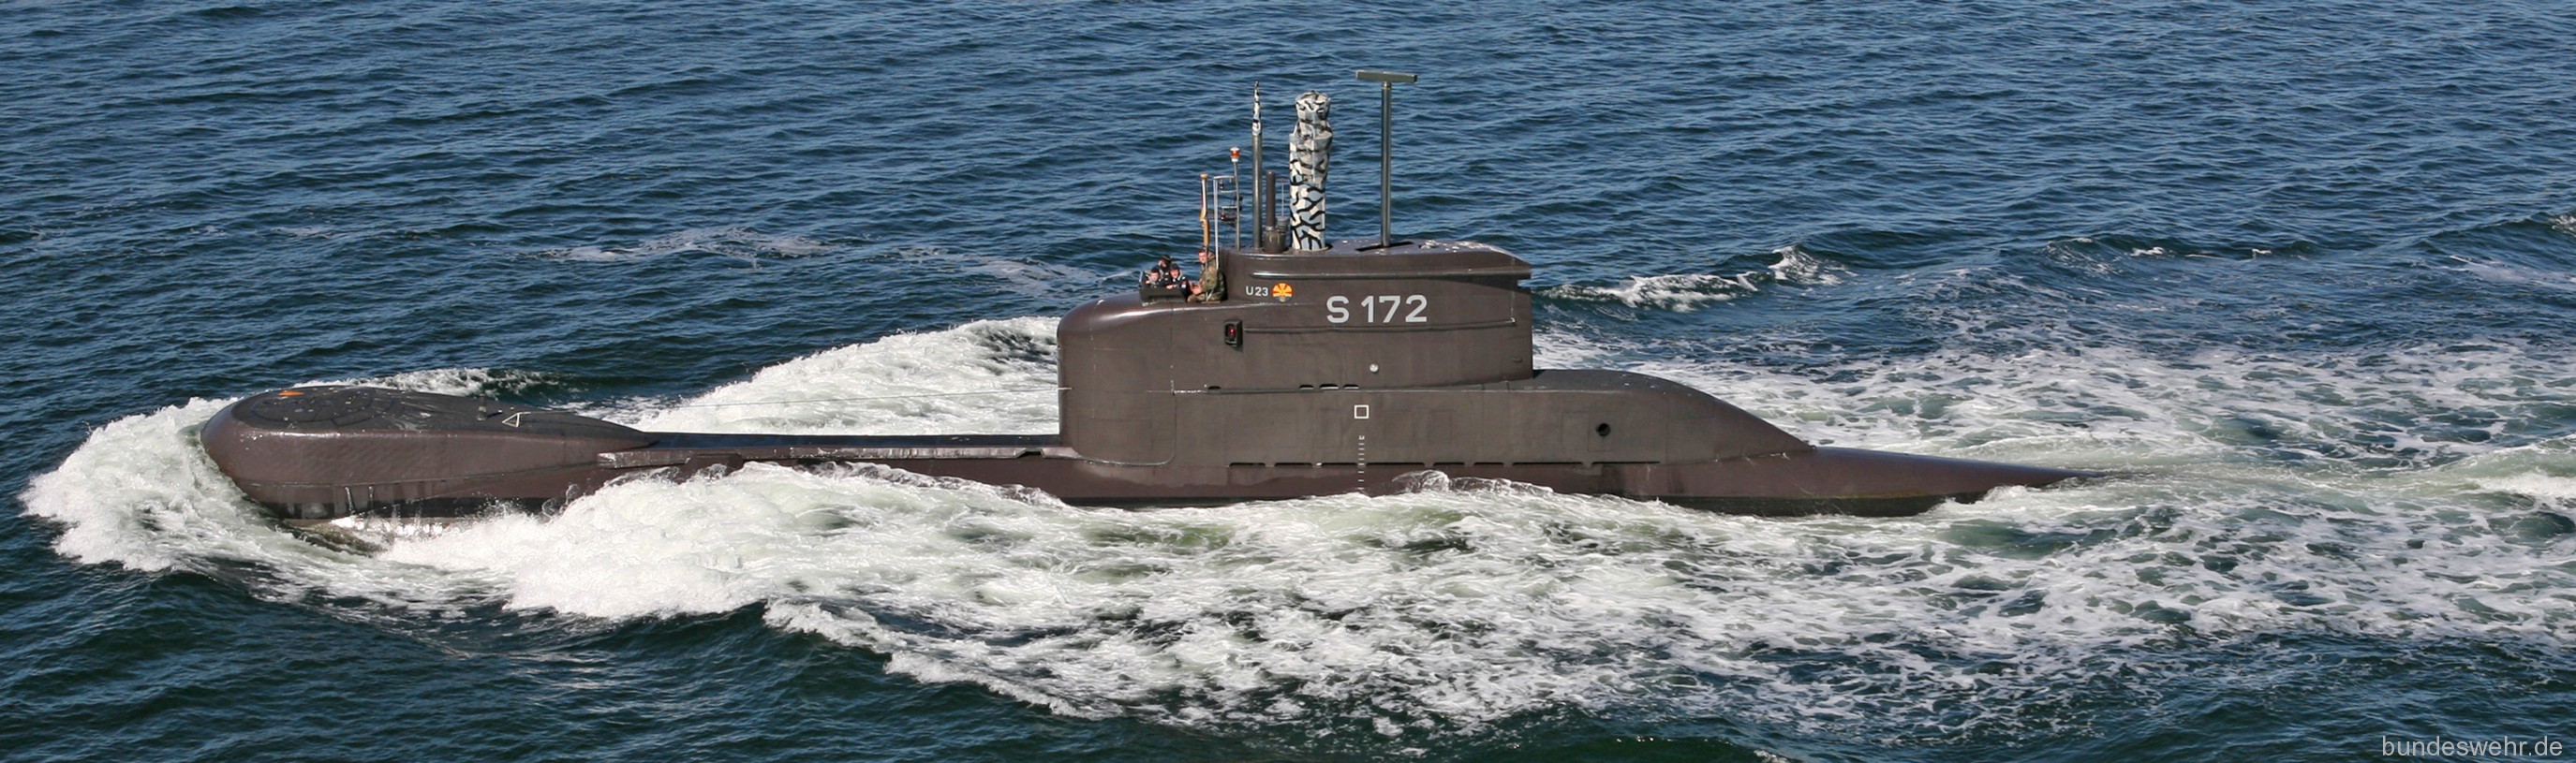 s-172 fgs u23 type 206 class submarine german navy 06